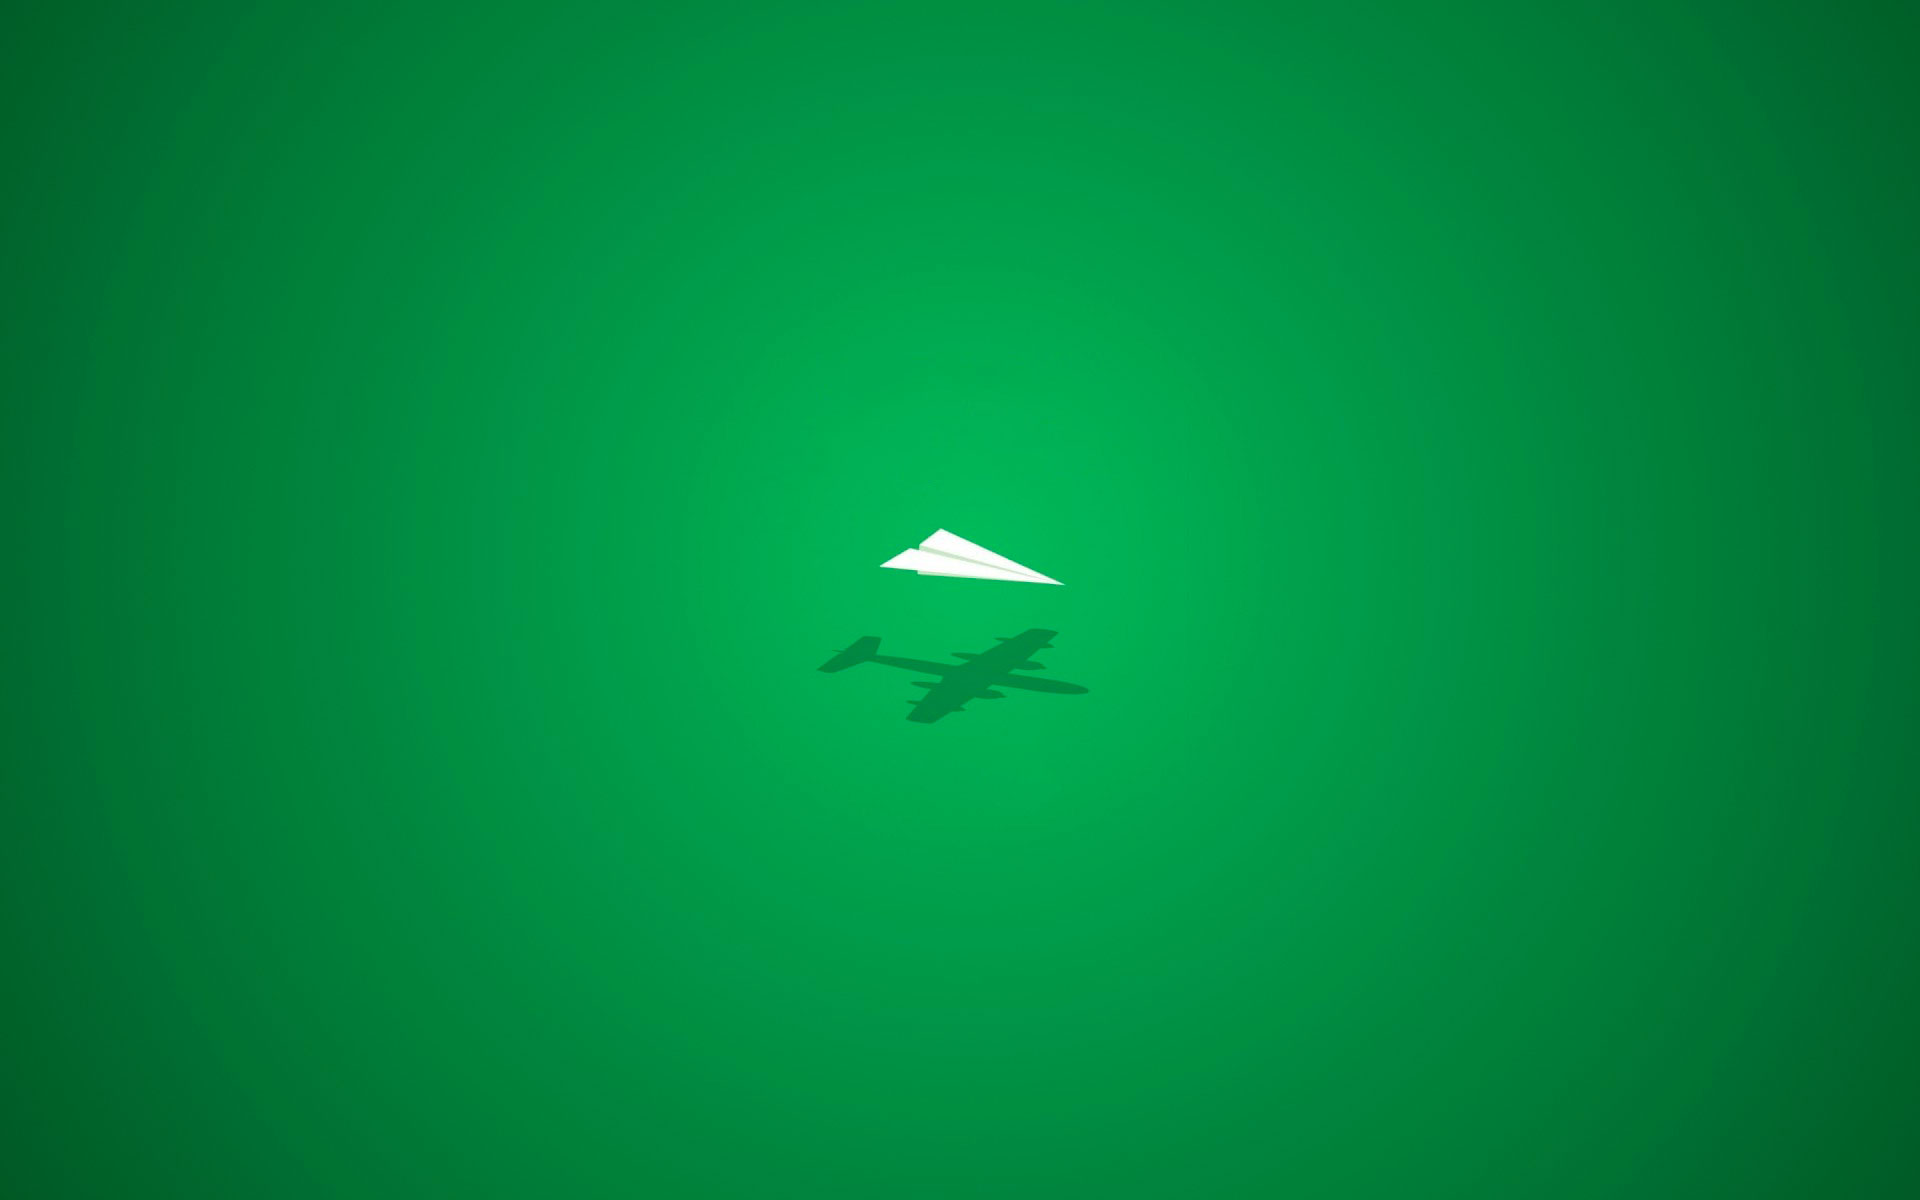 минимализм, бумажный самолетик, тень самолета, зеленый фон,   minimalism, paper airplane, the shadow of the plane, green background